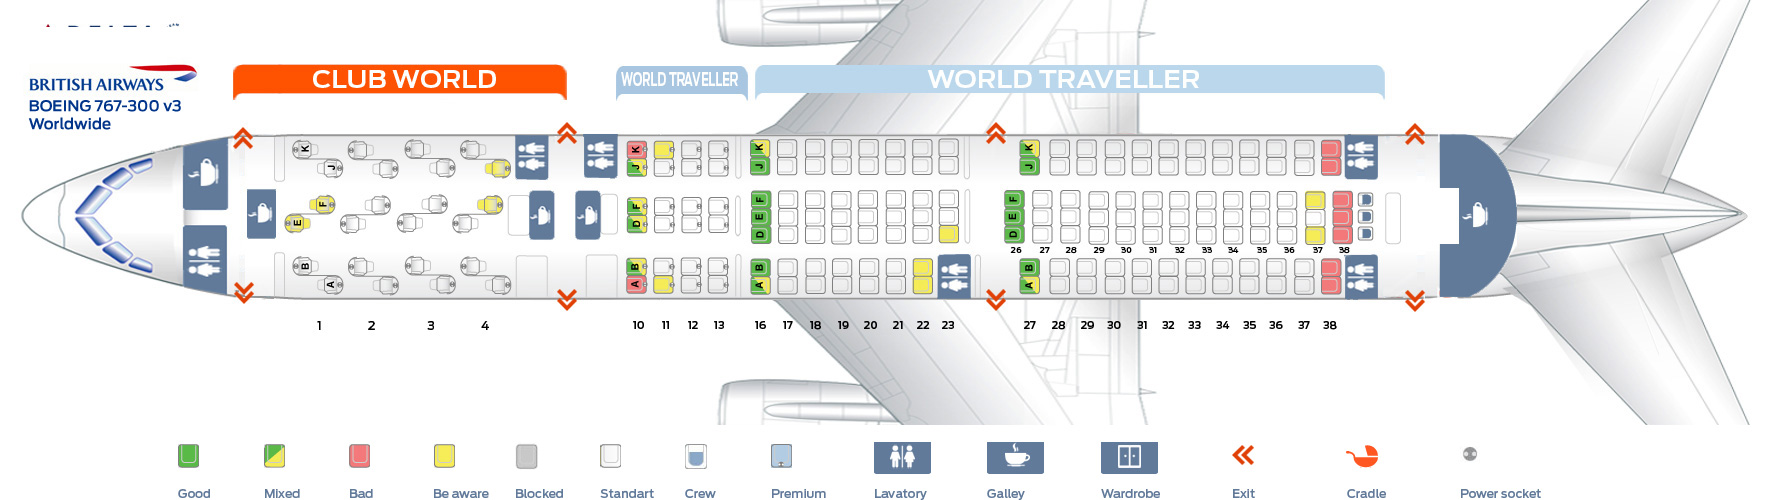 767 Jet Seating Chart